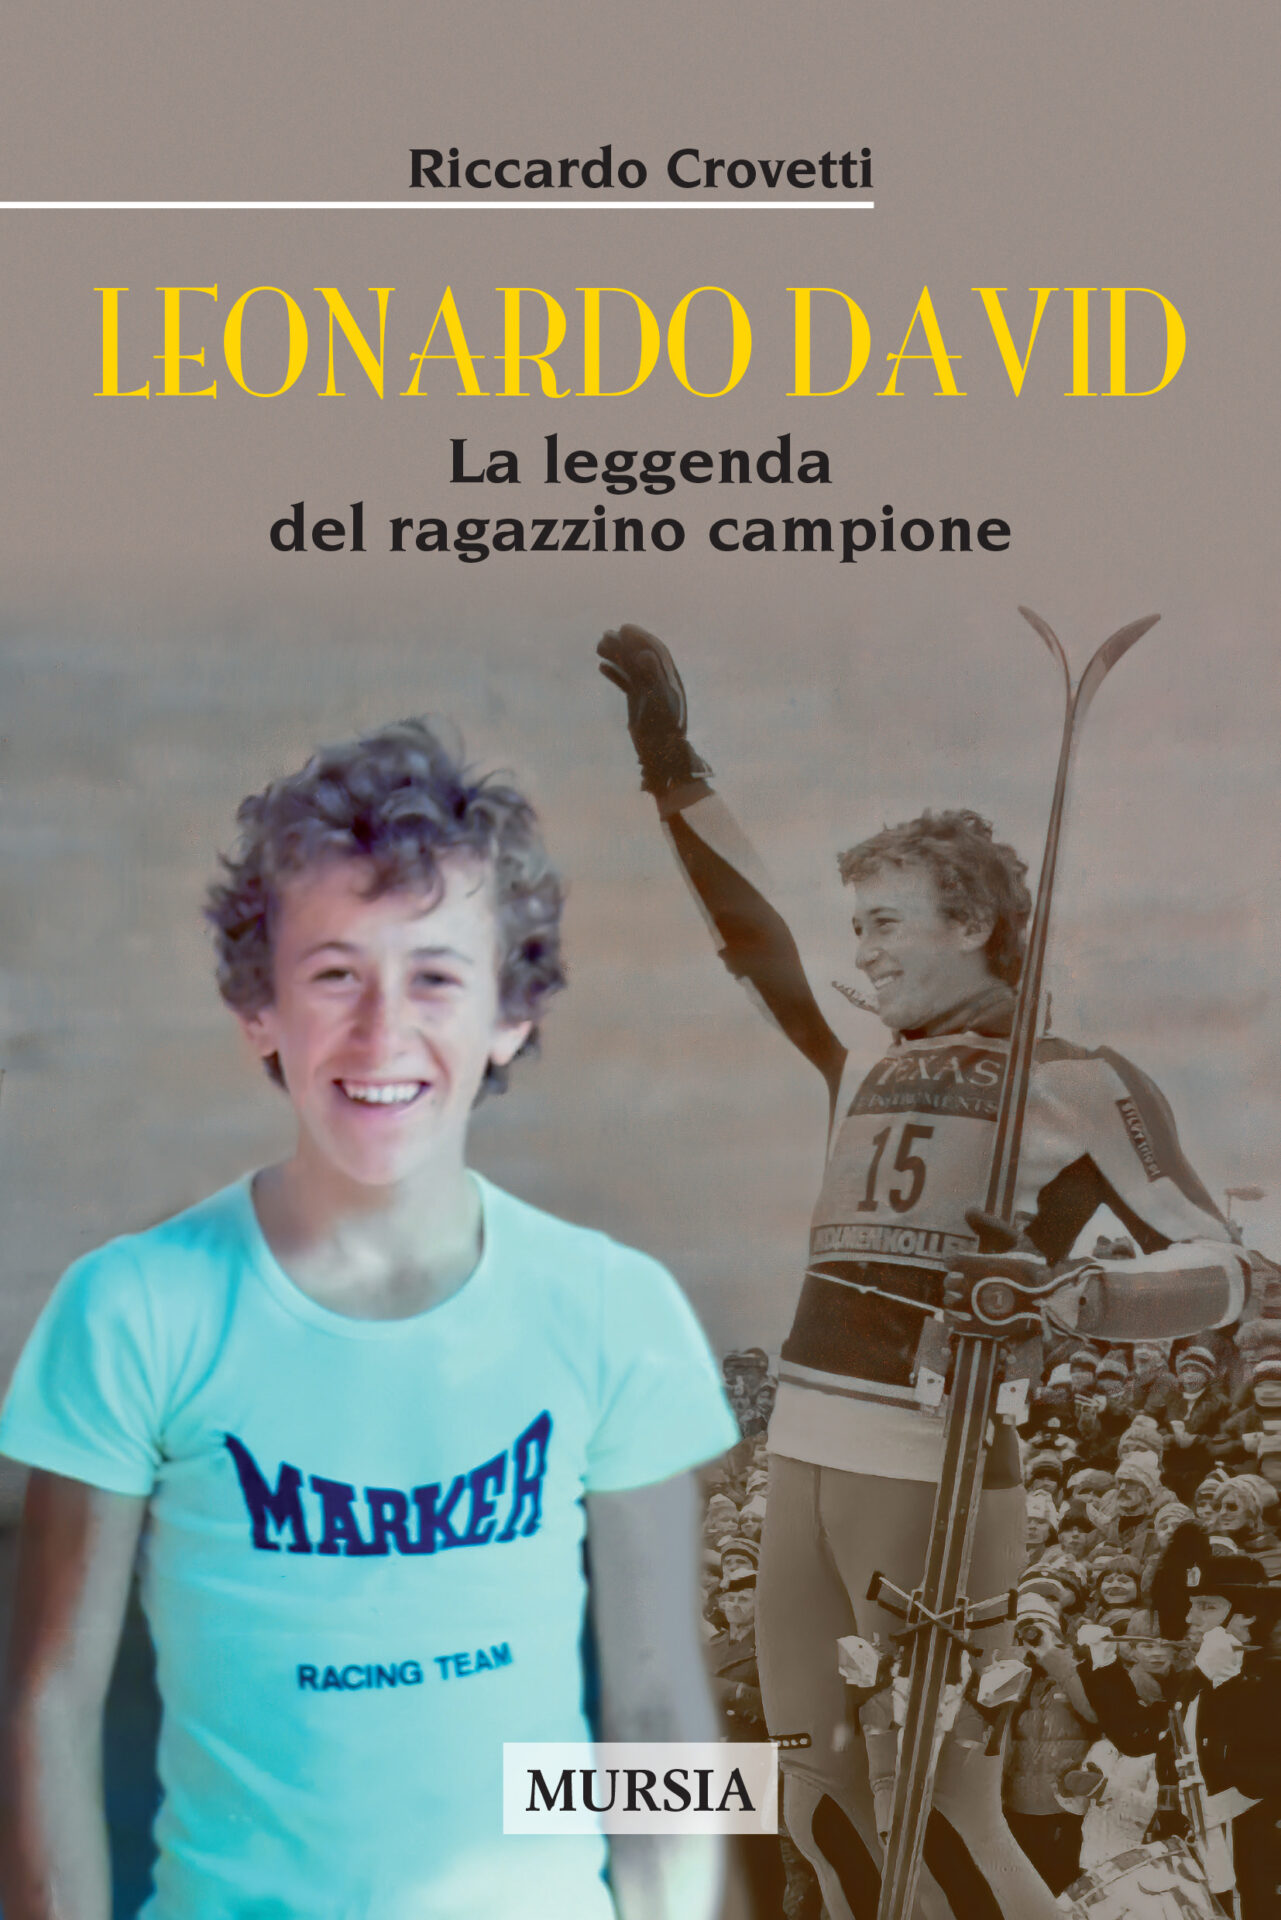 Copertina libro Leonardo David